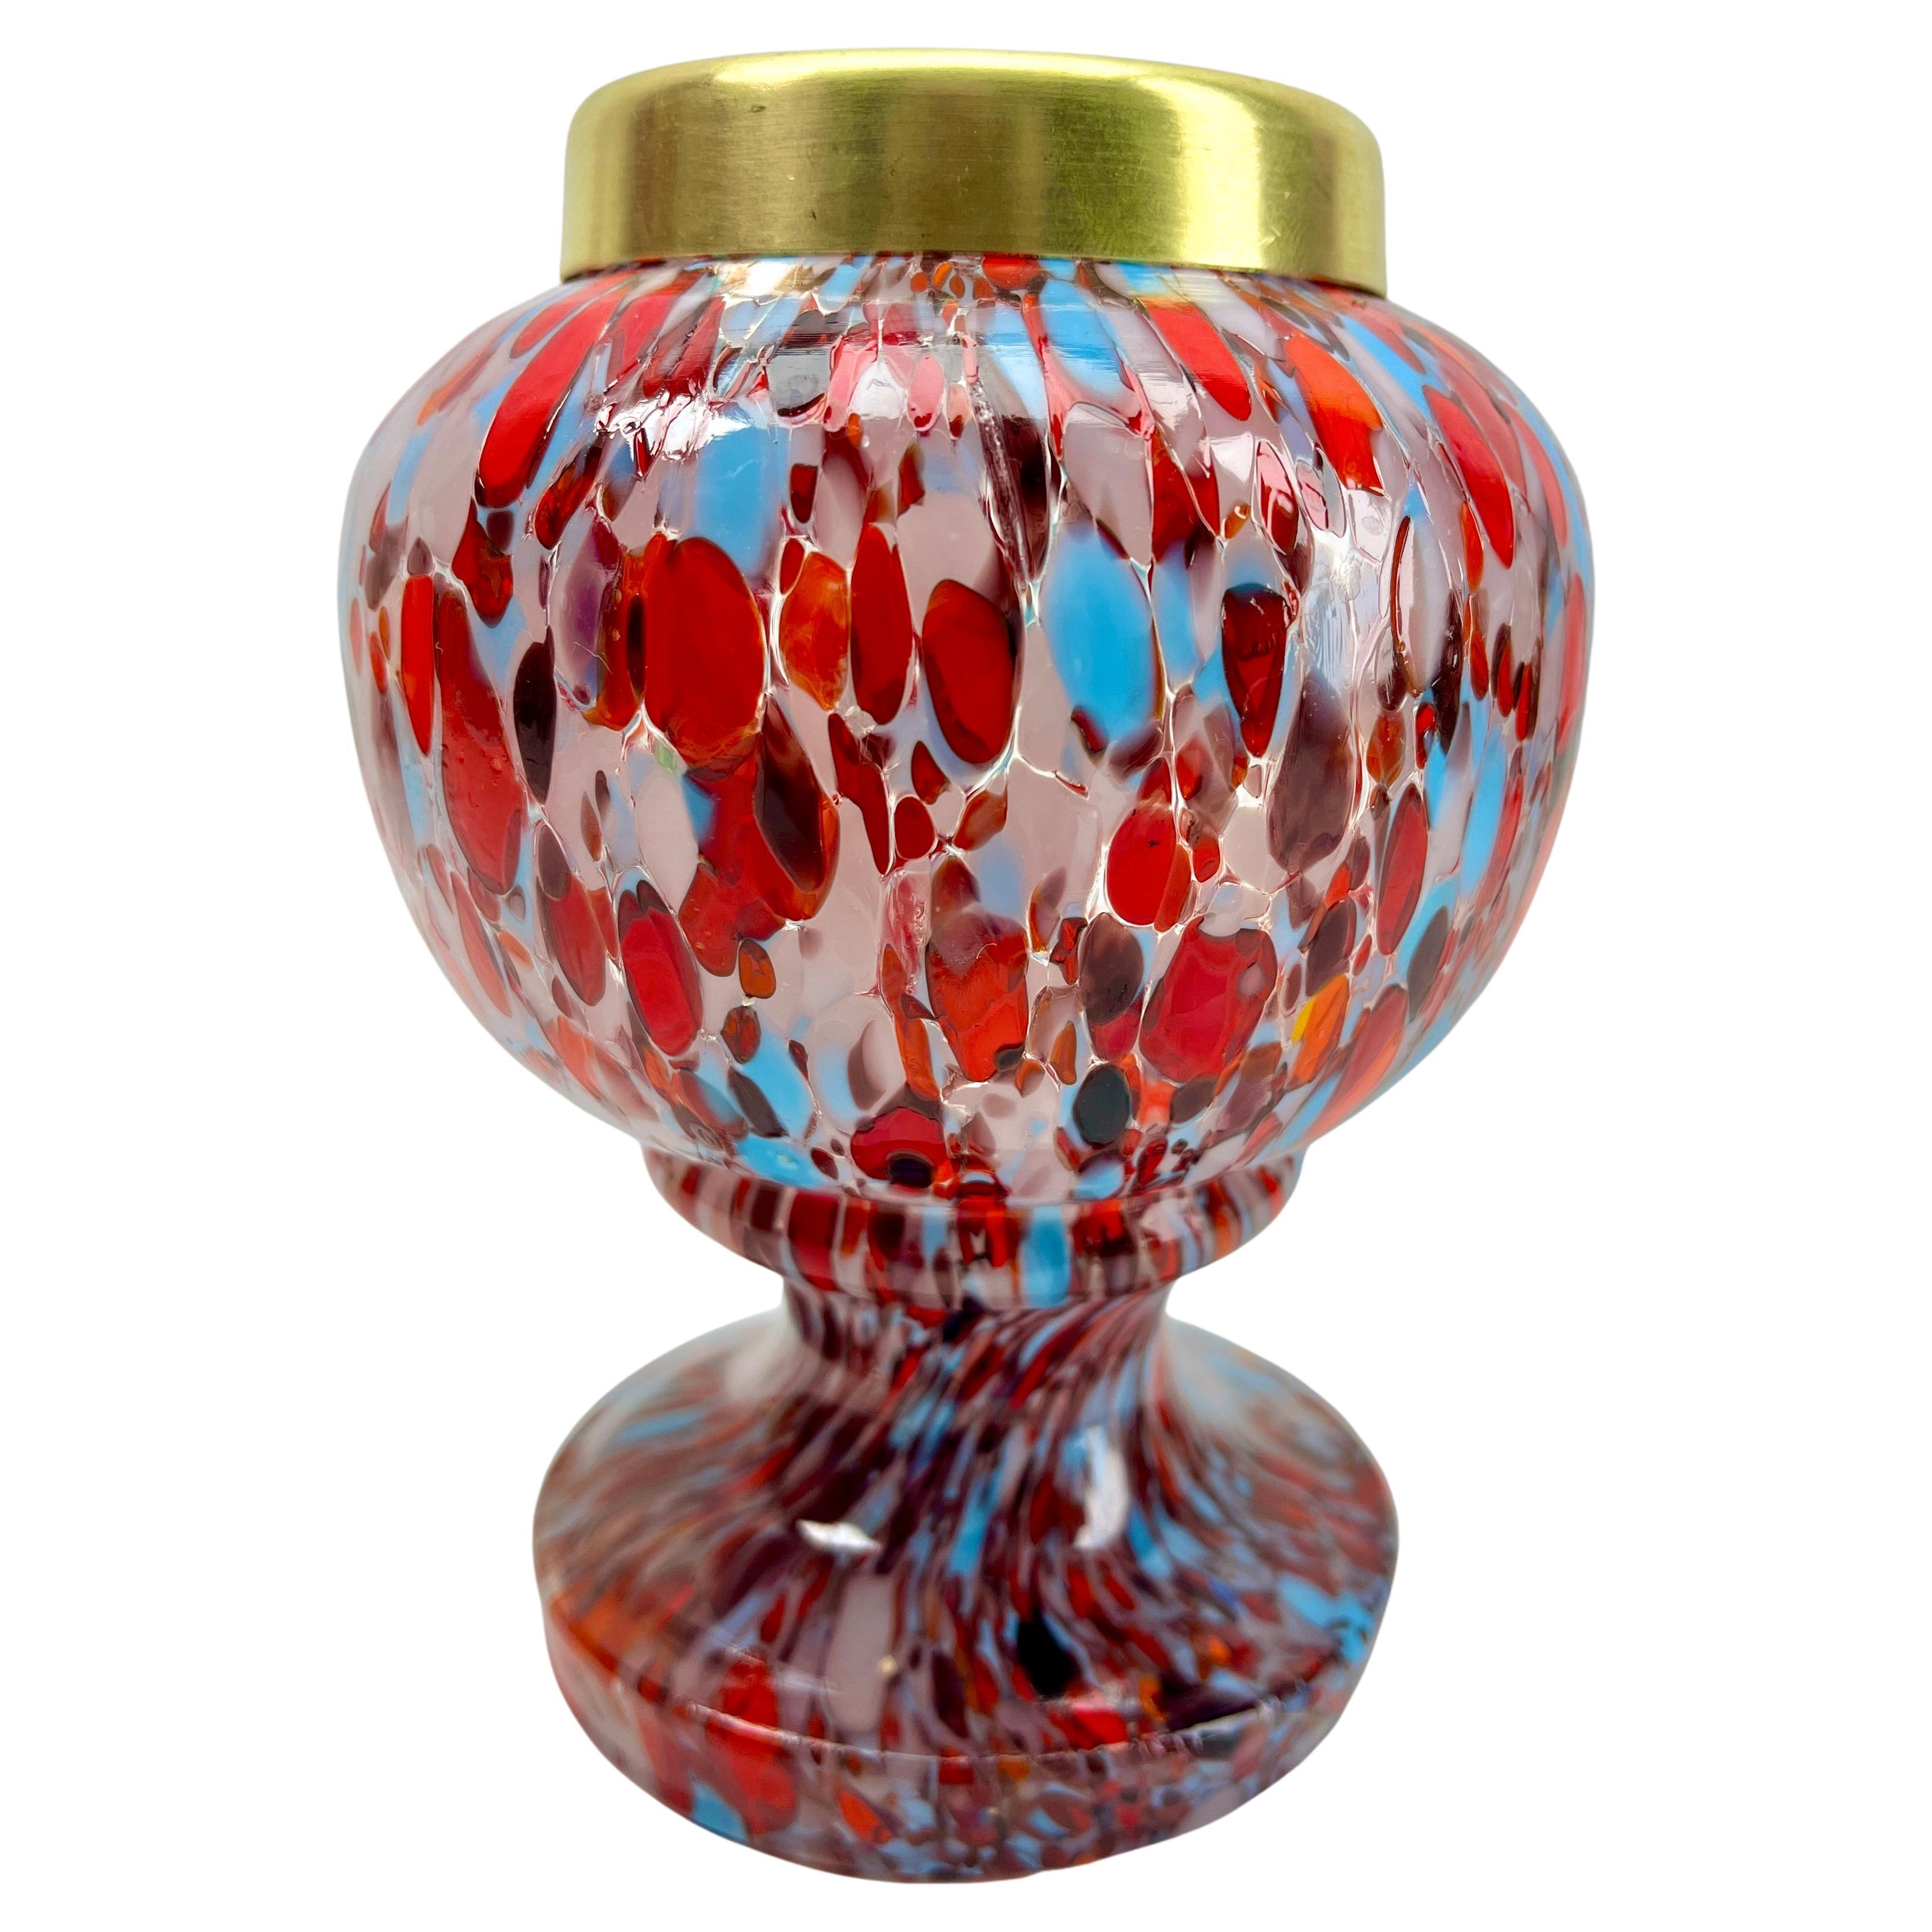 Kralik 'Pique Fleurs'  Vase, in Multi Color Decor with Grille, Late 1930s For Sale